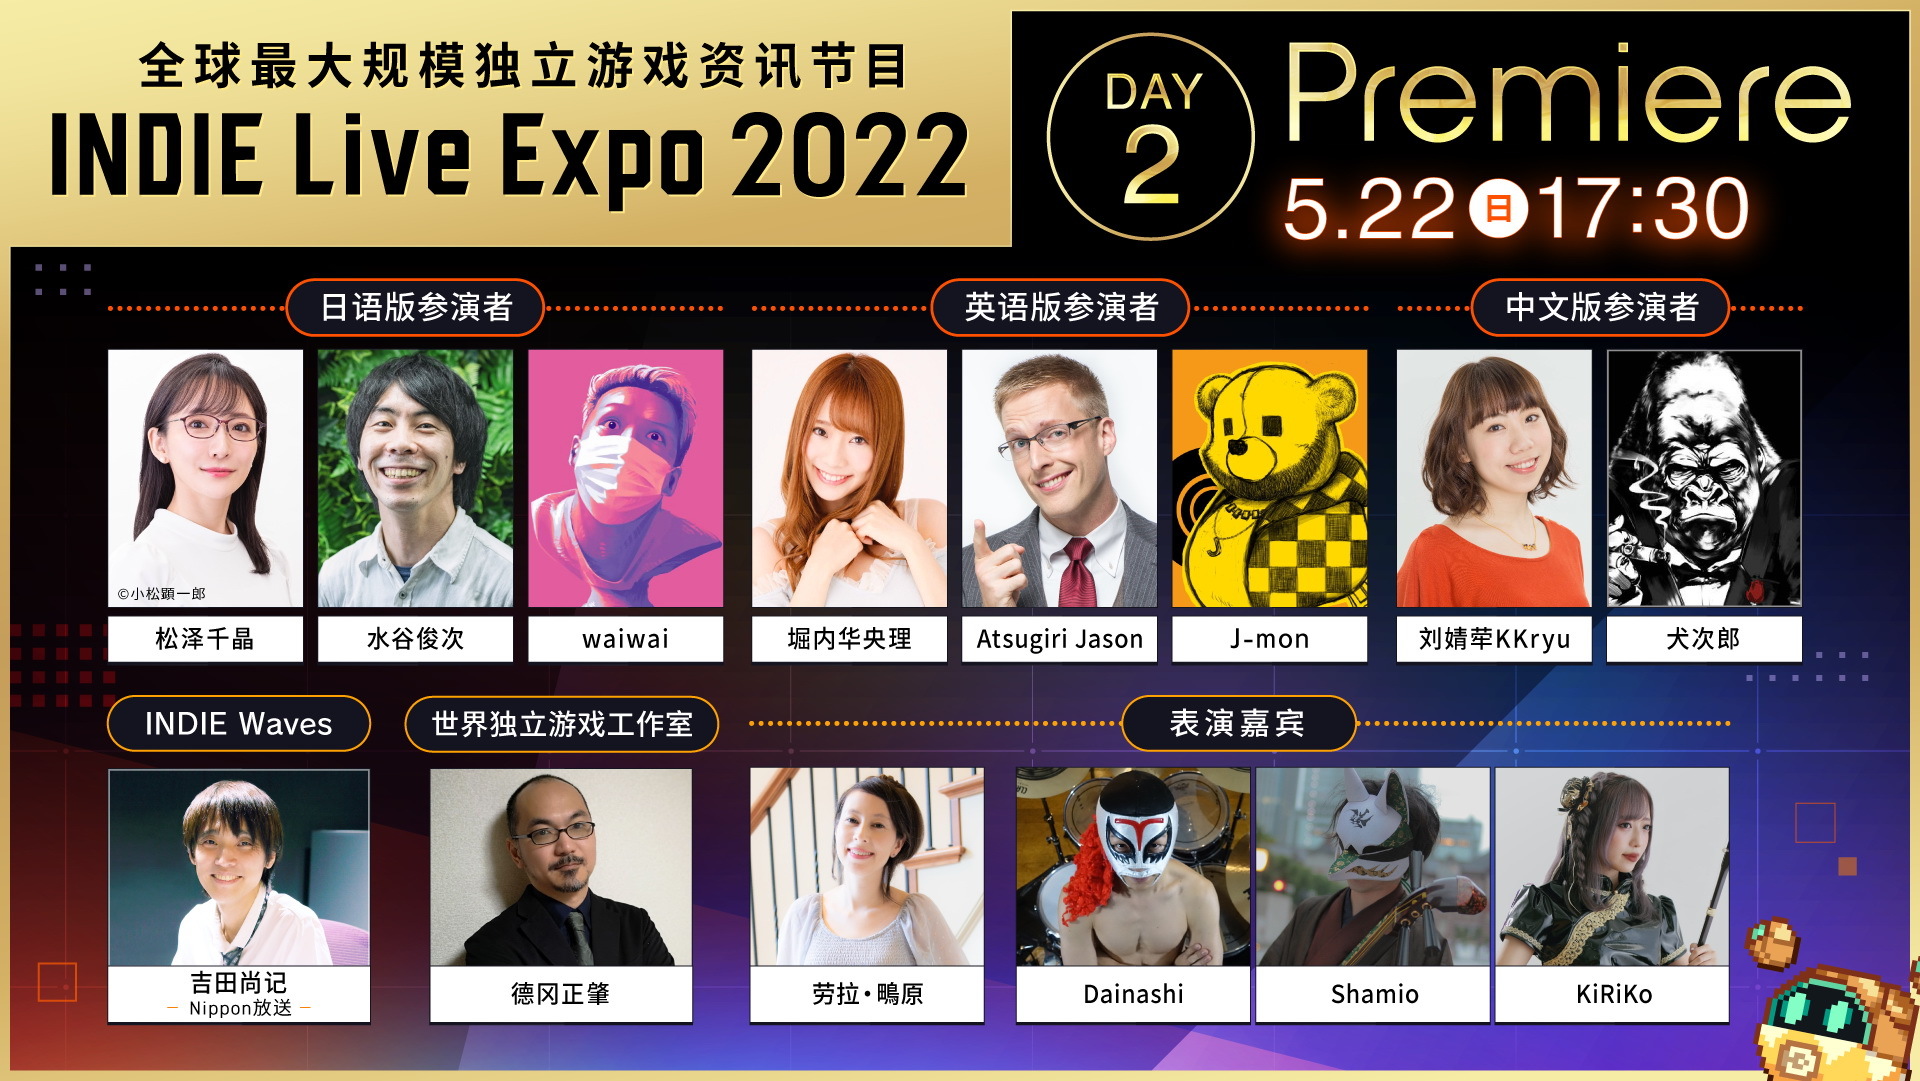 圖https://p2.bahamut.com.tw/B/2KU/69/6c4e737cb989aa7934dfca1ab11gdxl5.JPG, 獨立遊戲線上節目INDIE Live Expo 2022 本週末登場